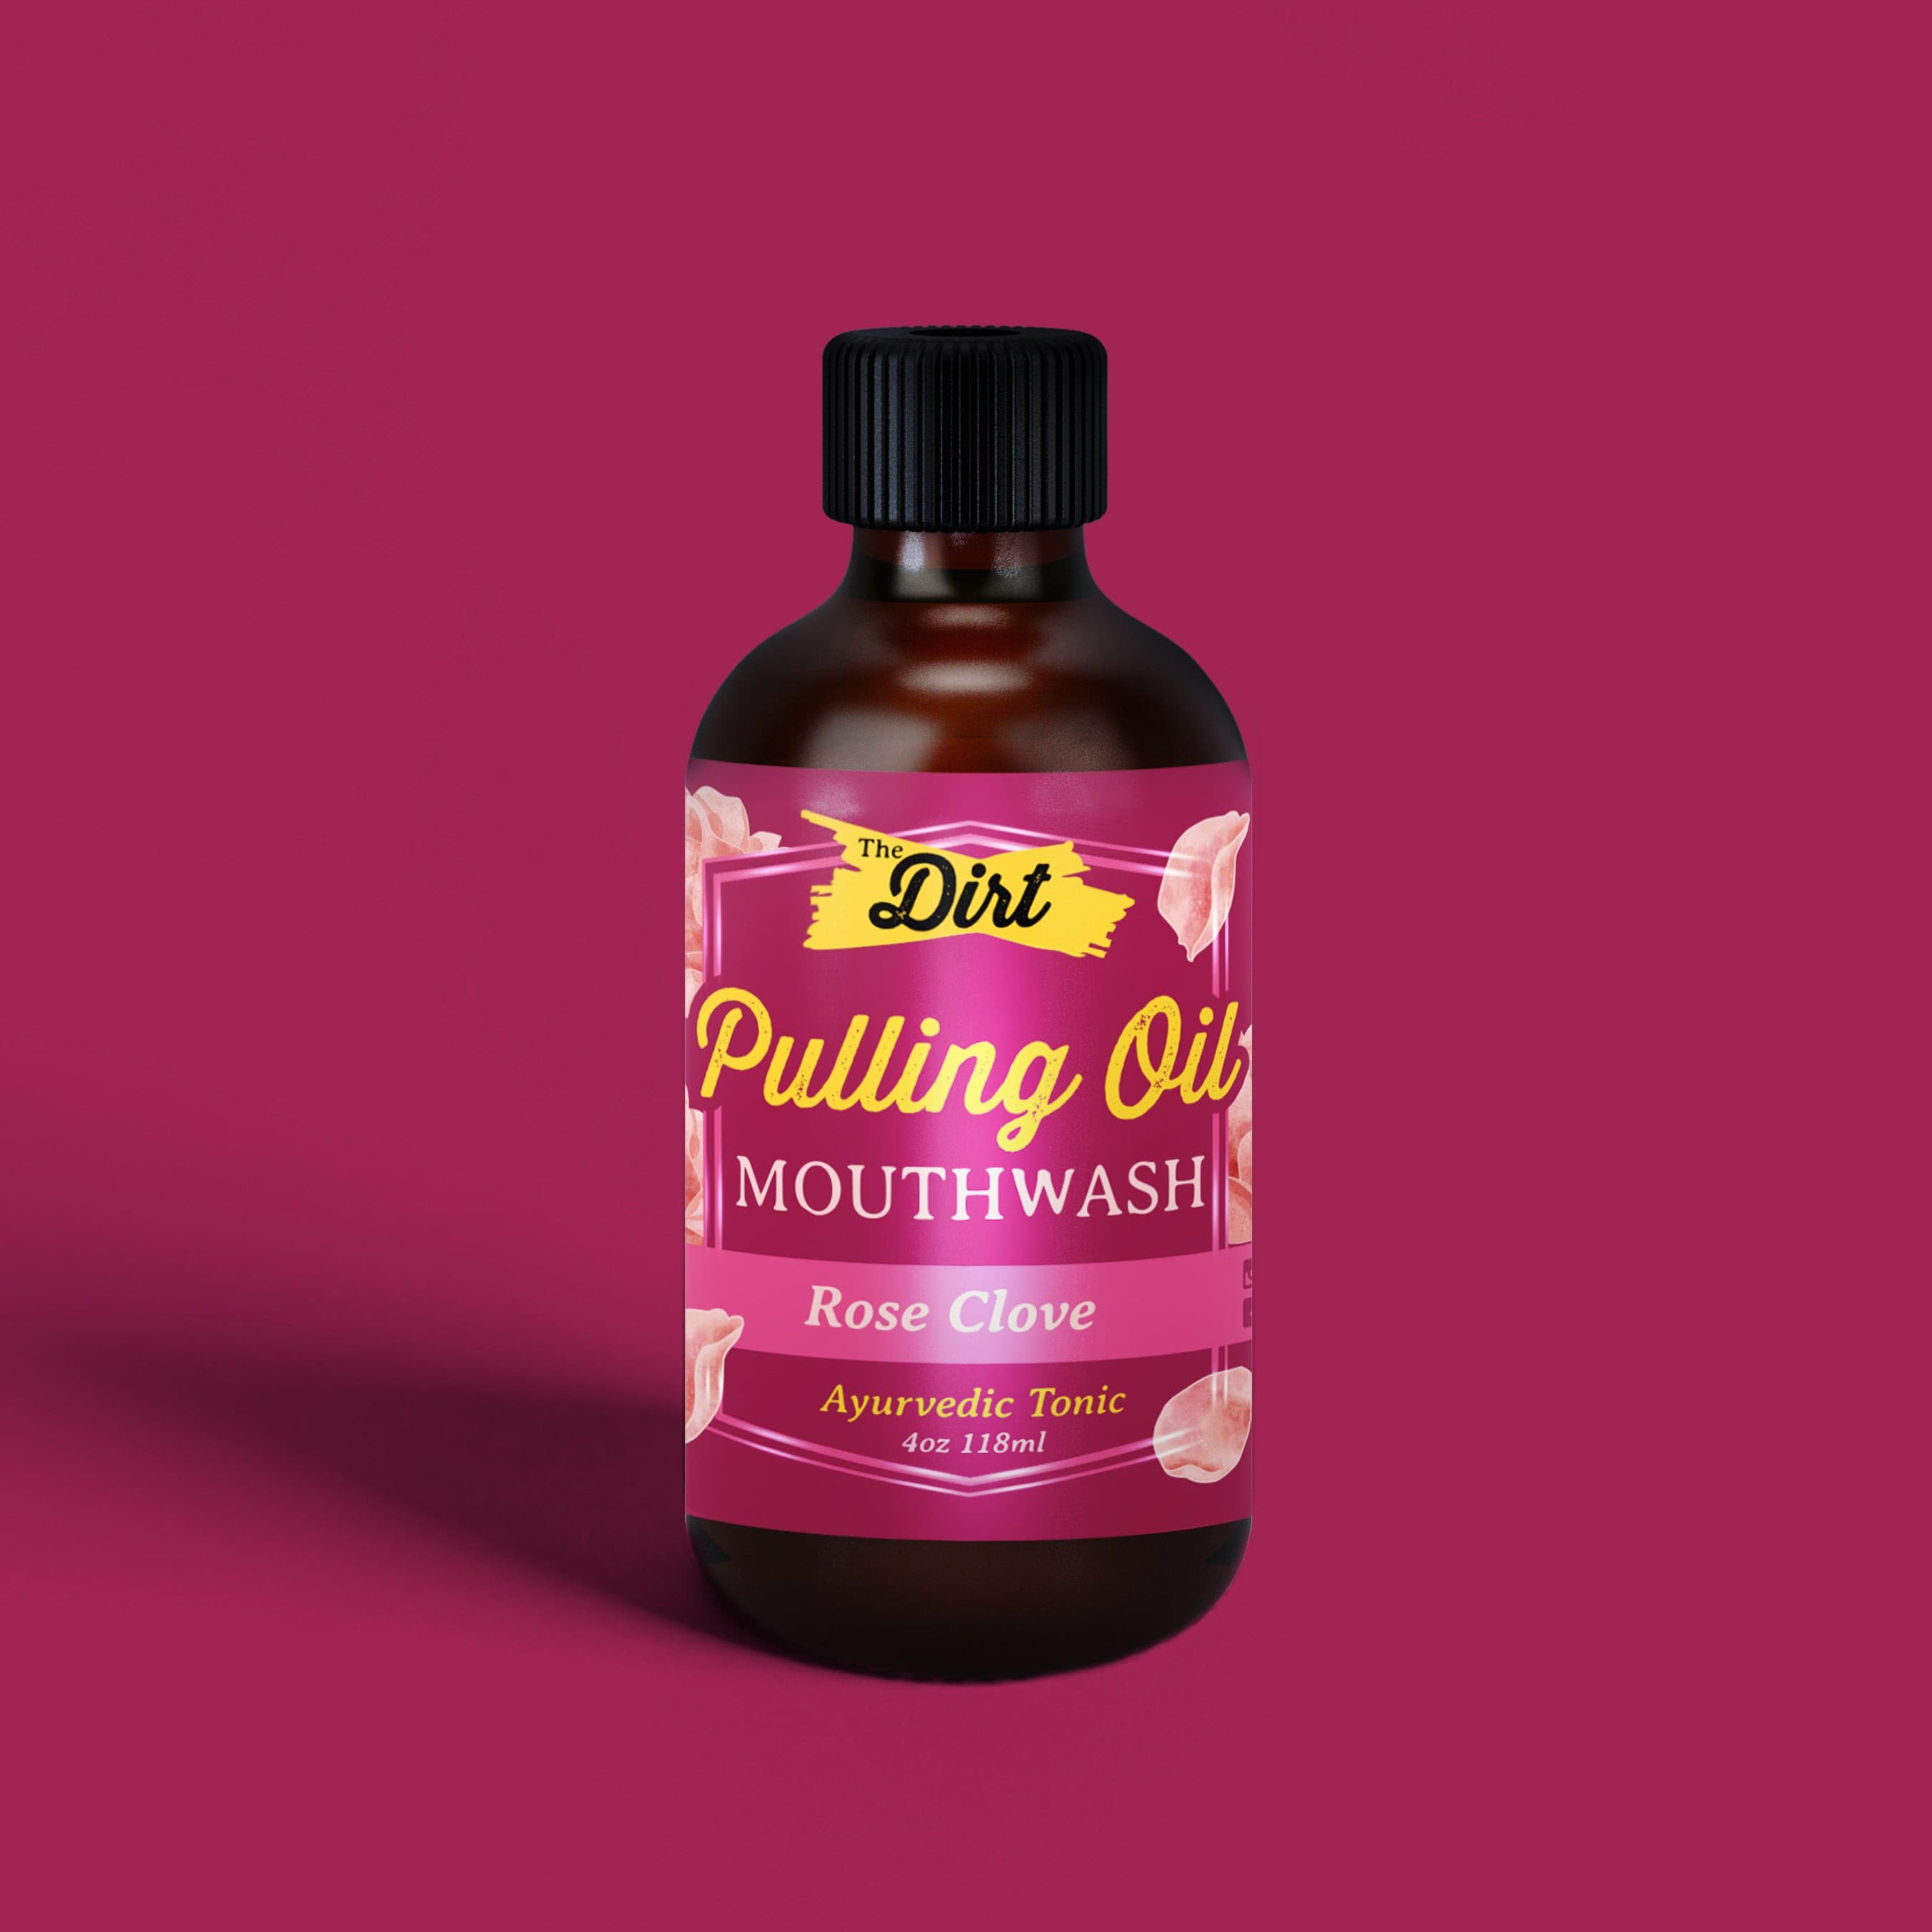 Pulling Oil Mouthwash - The Dirt - Super Natural Oral Care 4oz / Rose Clove Mint Oral Care